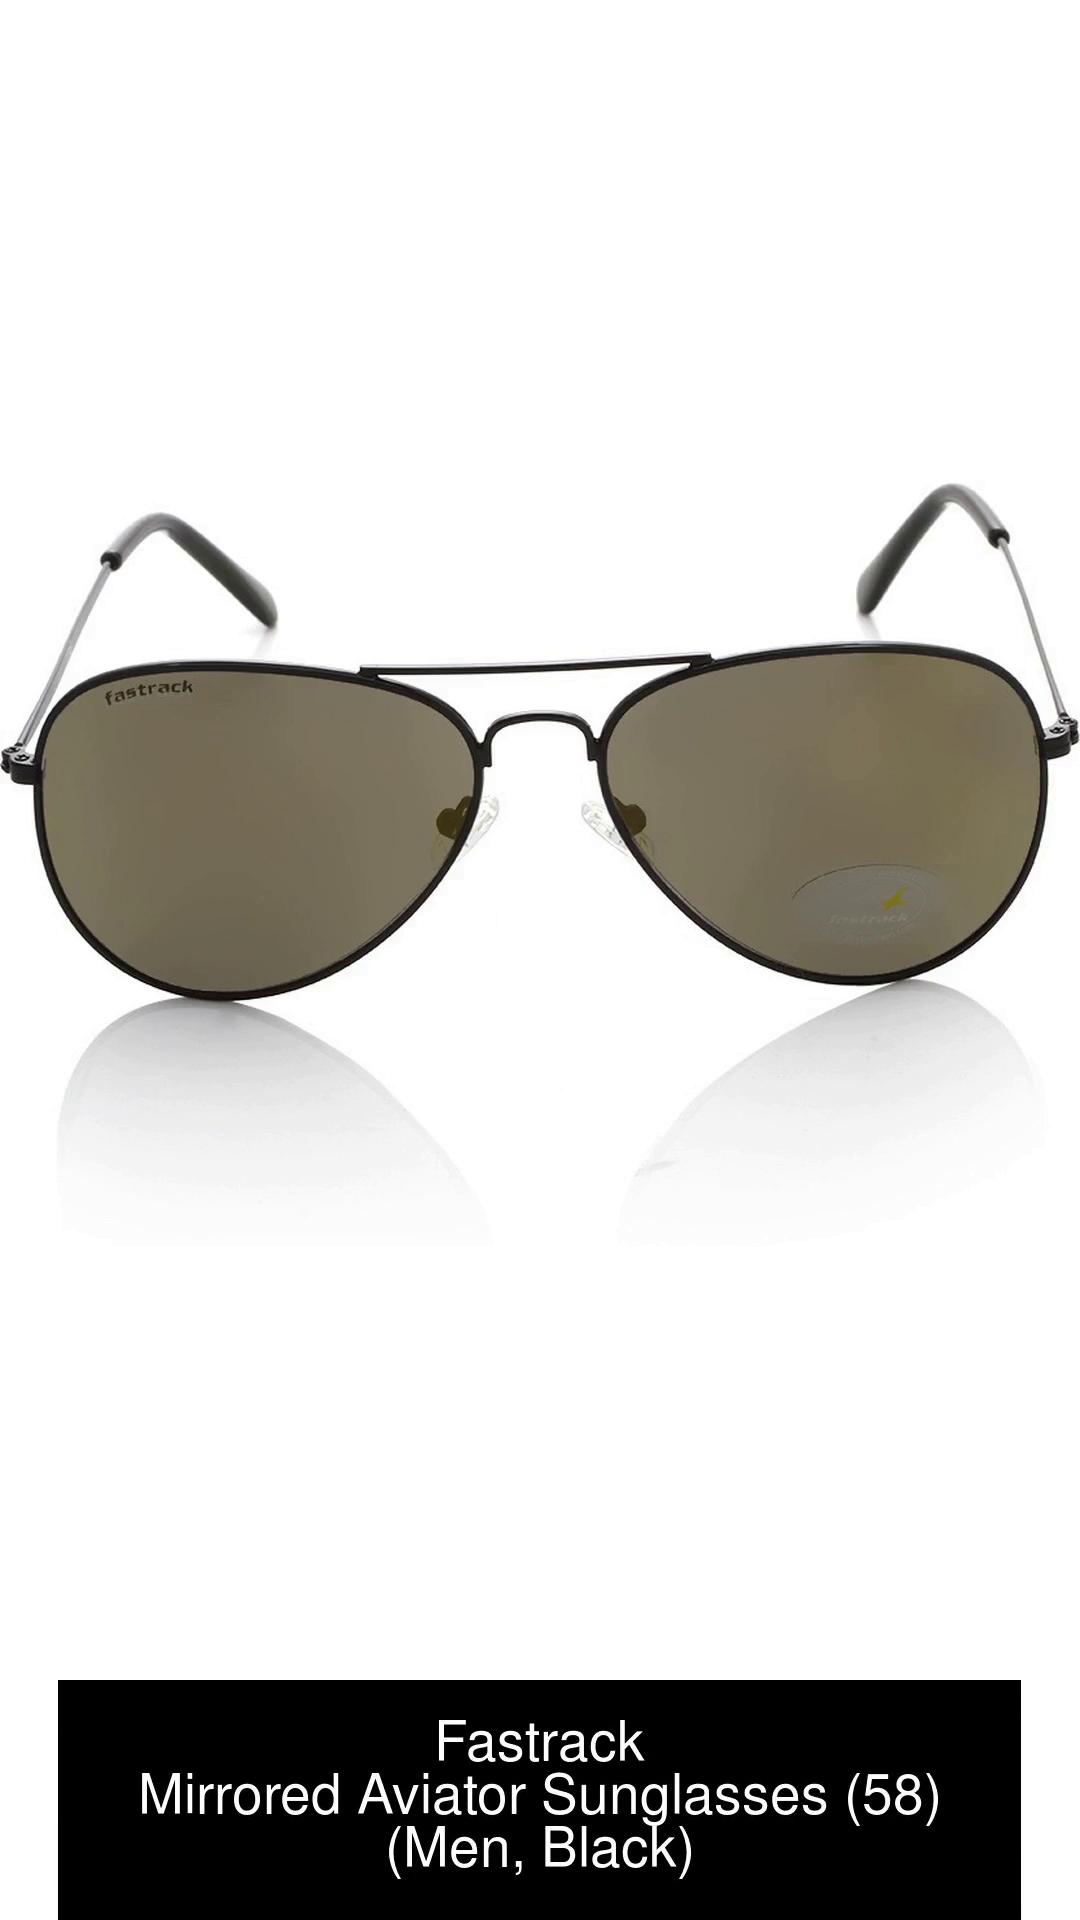 Black Square Fastrack Men Sunglasses - Visionsindia.in® - Sunglasses,  Contact Lens, Eyeglasses, Frames, Buy 1 Get 1 Offer for Gold Members